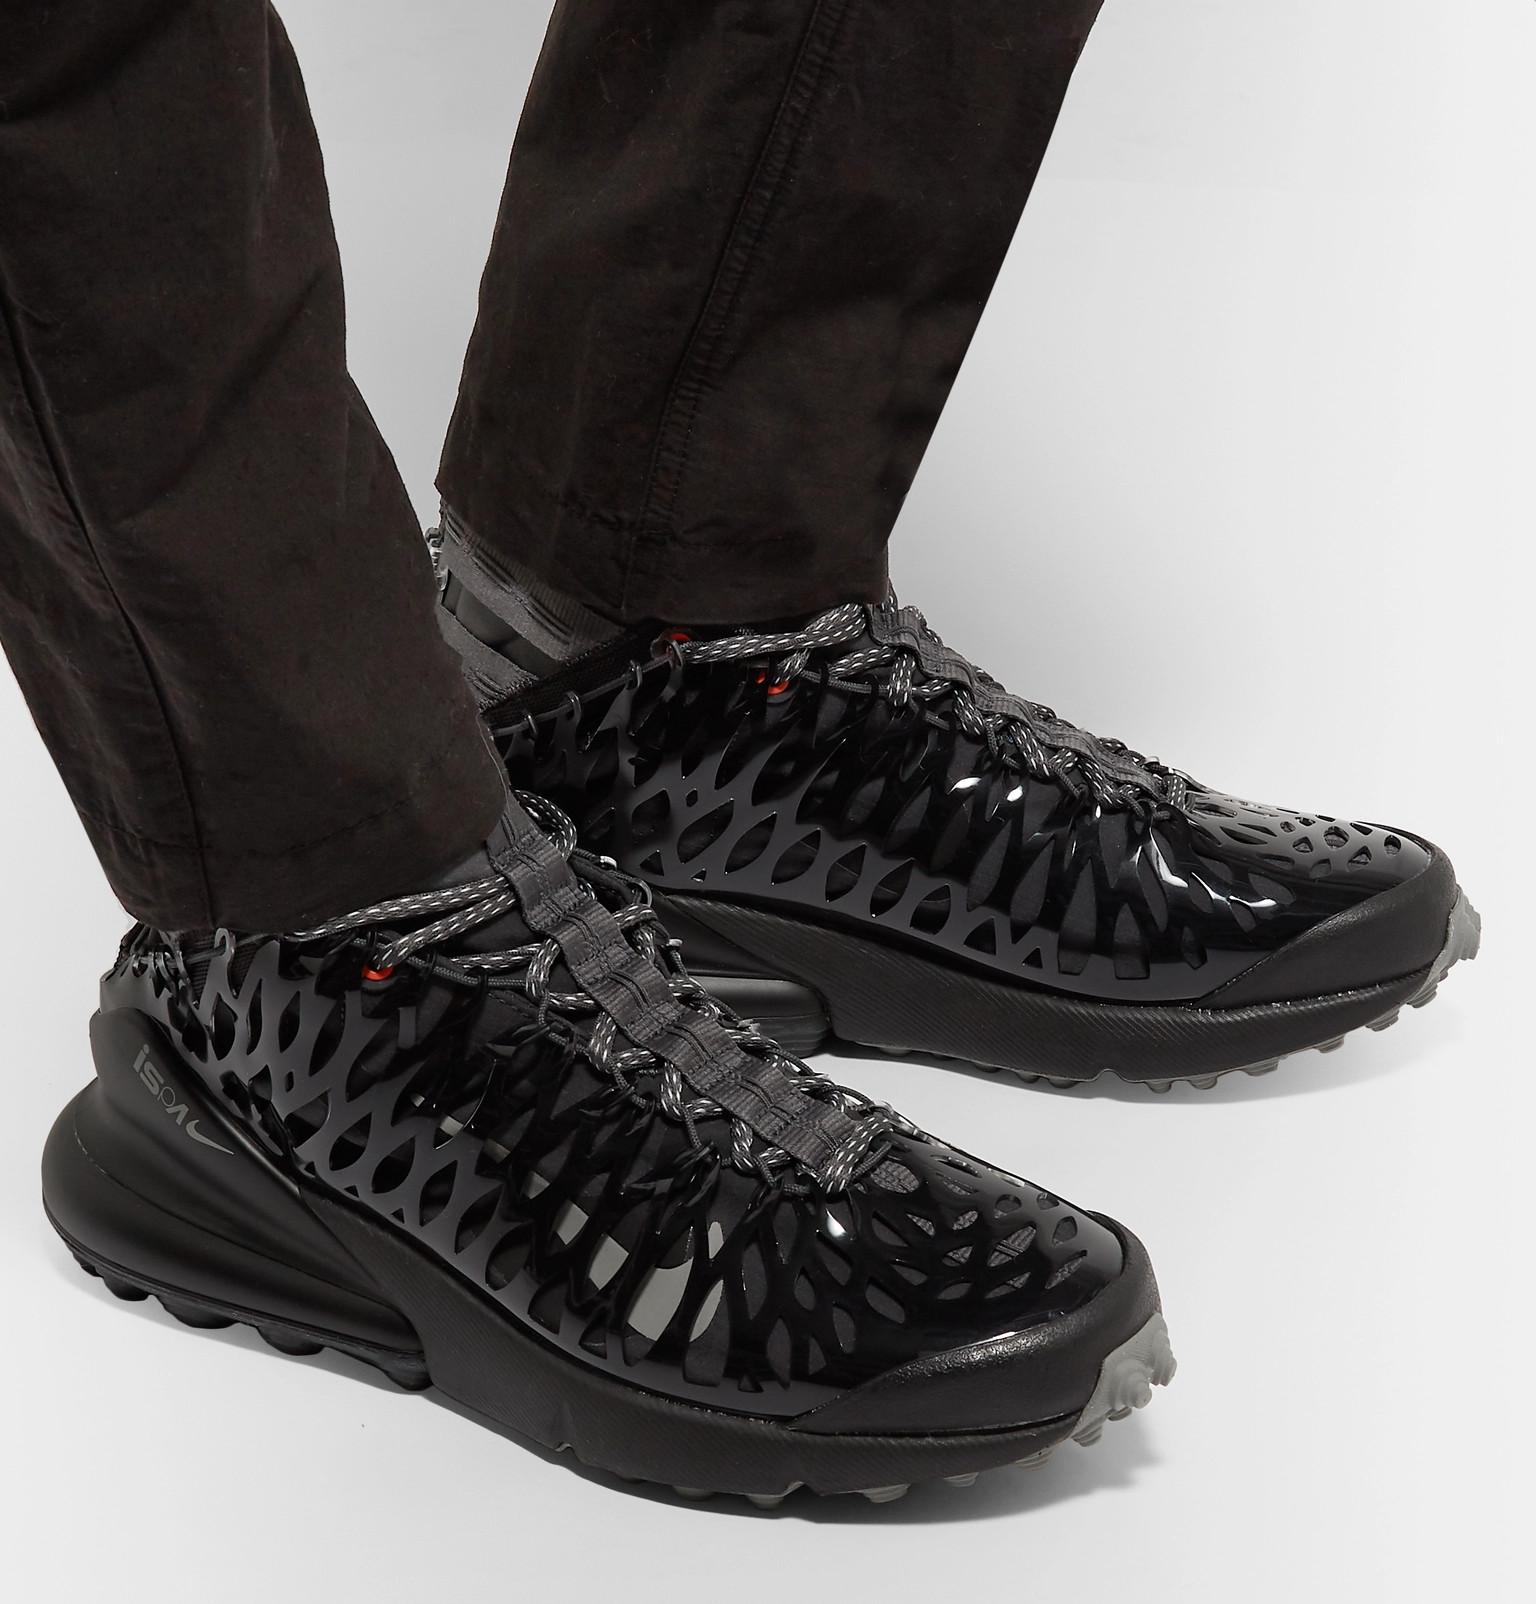 Nike Ispa Air Max 270 Sp Soe Sneakers in Black for Men - Save 70% - Lyst